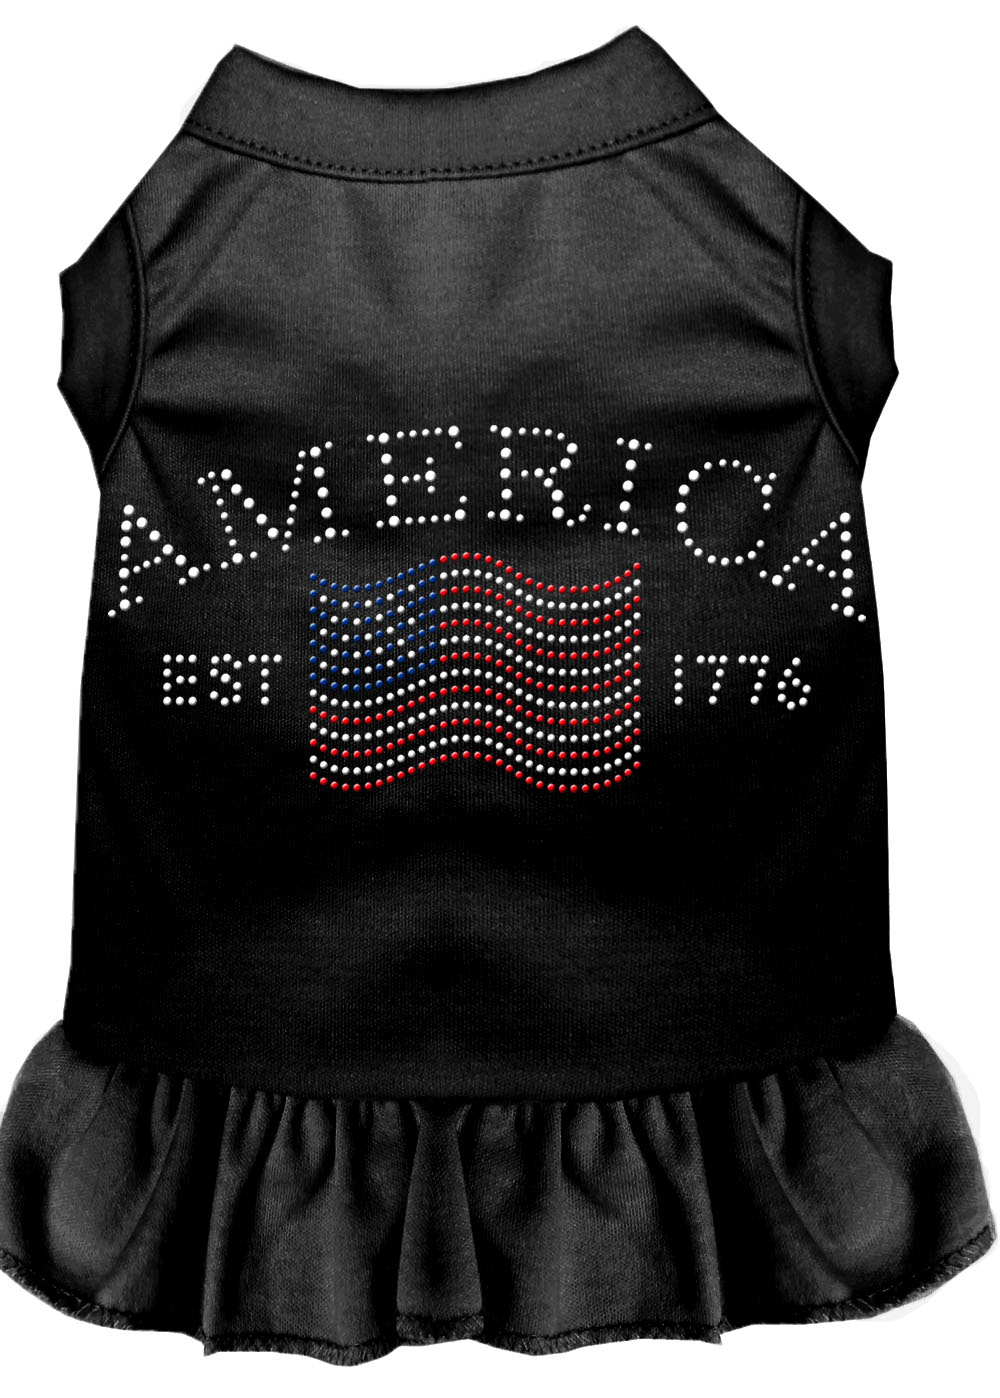 Classic America Rhinestone Dress Black XS